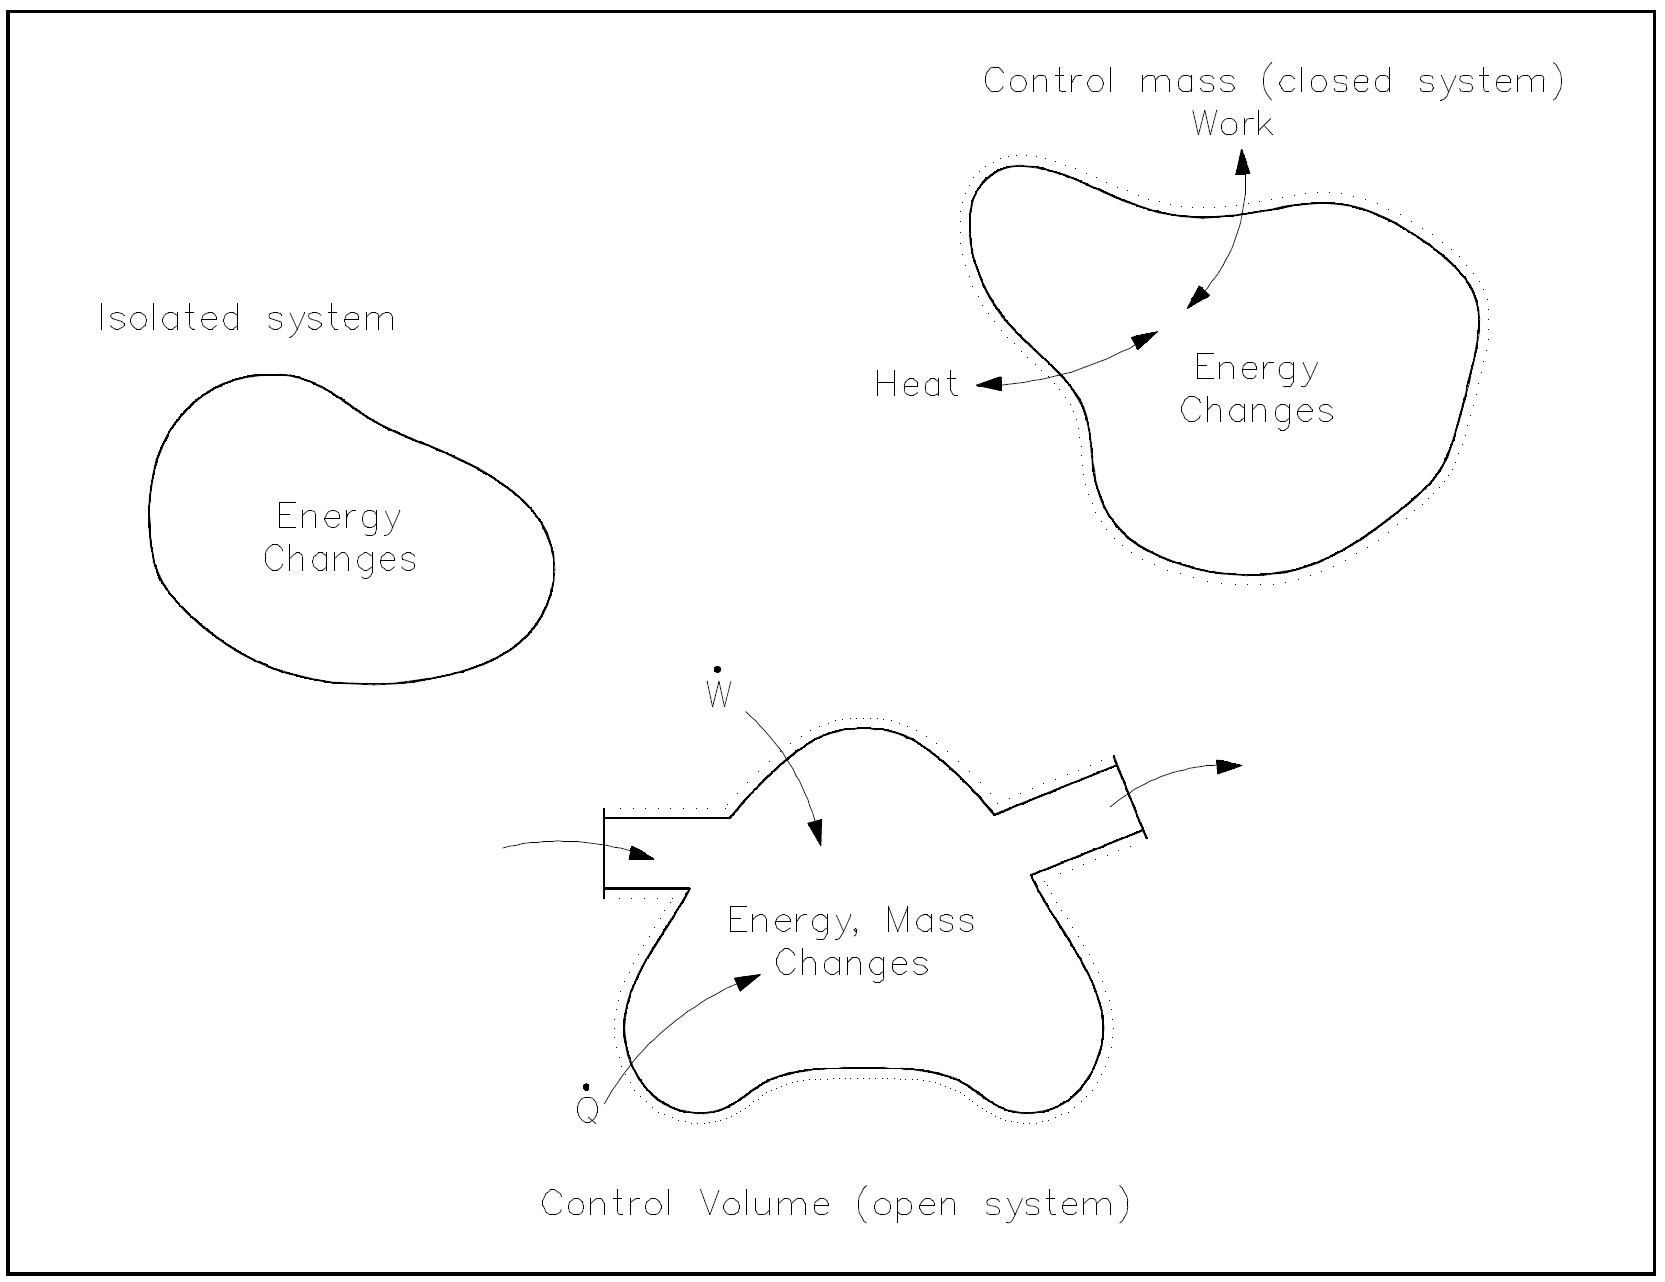 Figure 15: Control Volume Concepts